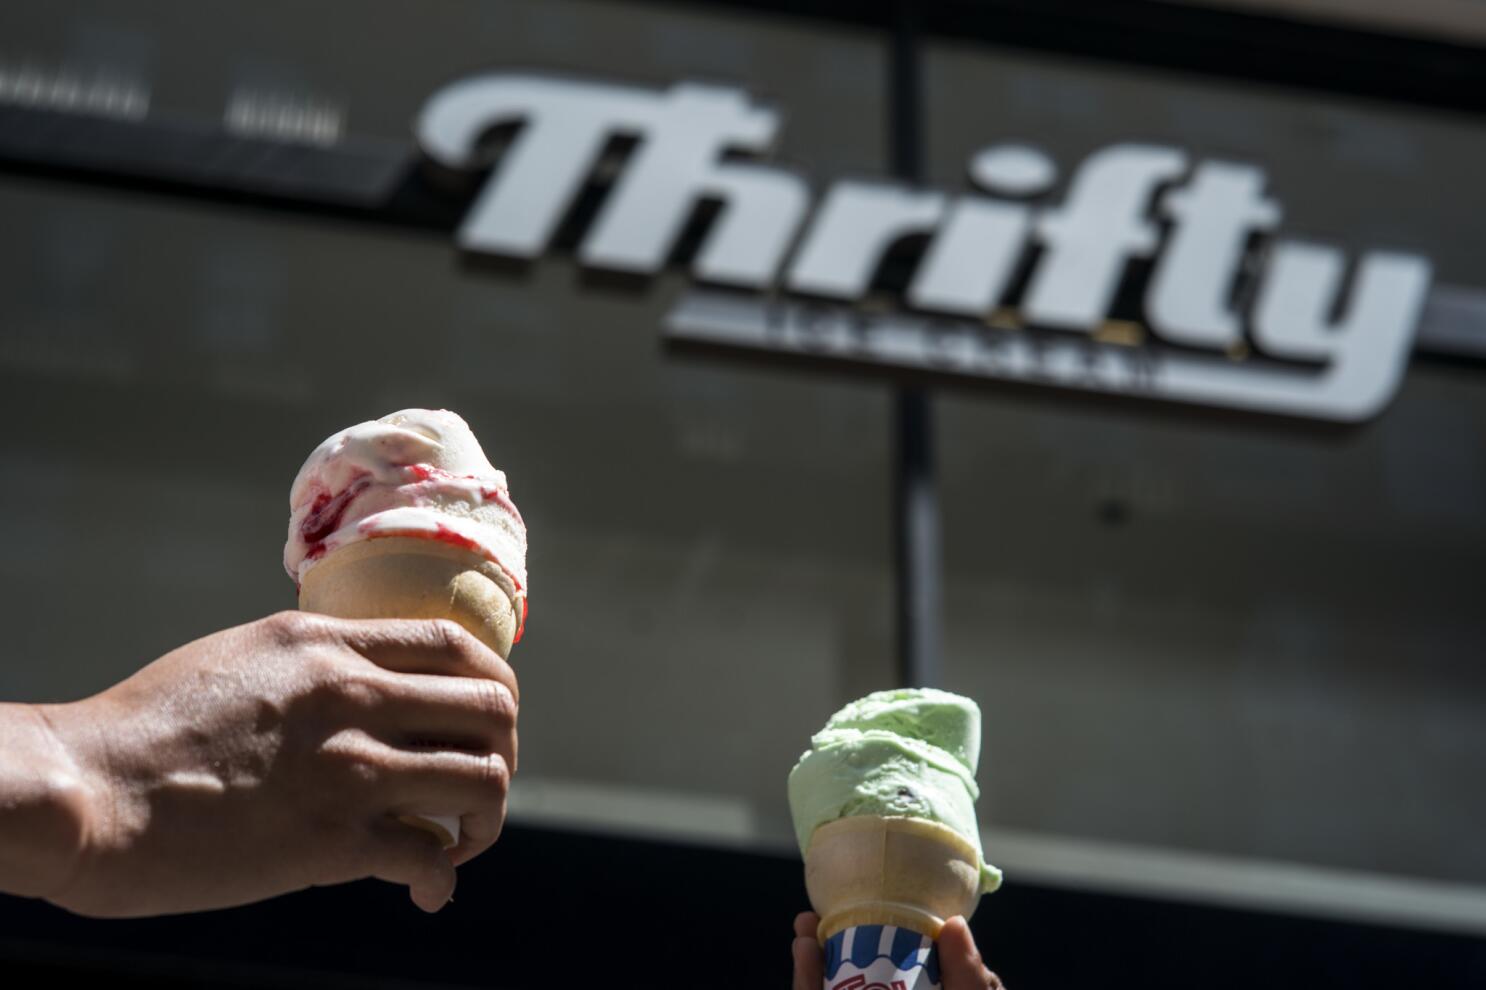 Thrifty Ice Cream (@thriftyicecream) • Instagram photos and videos